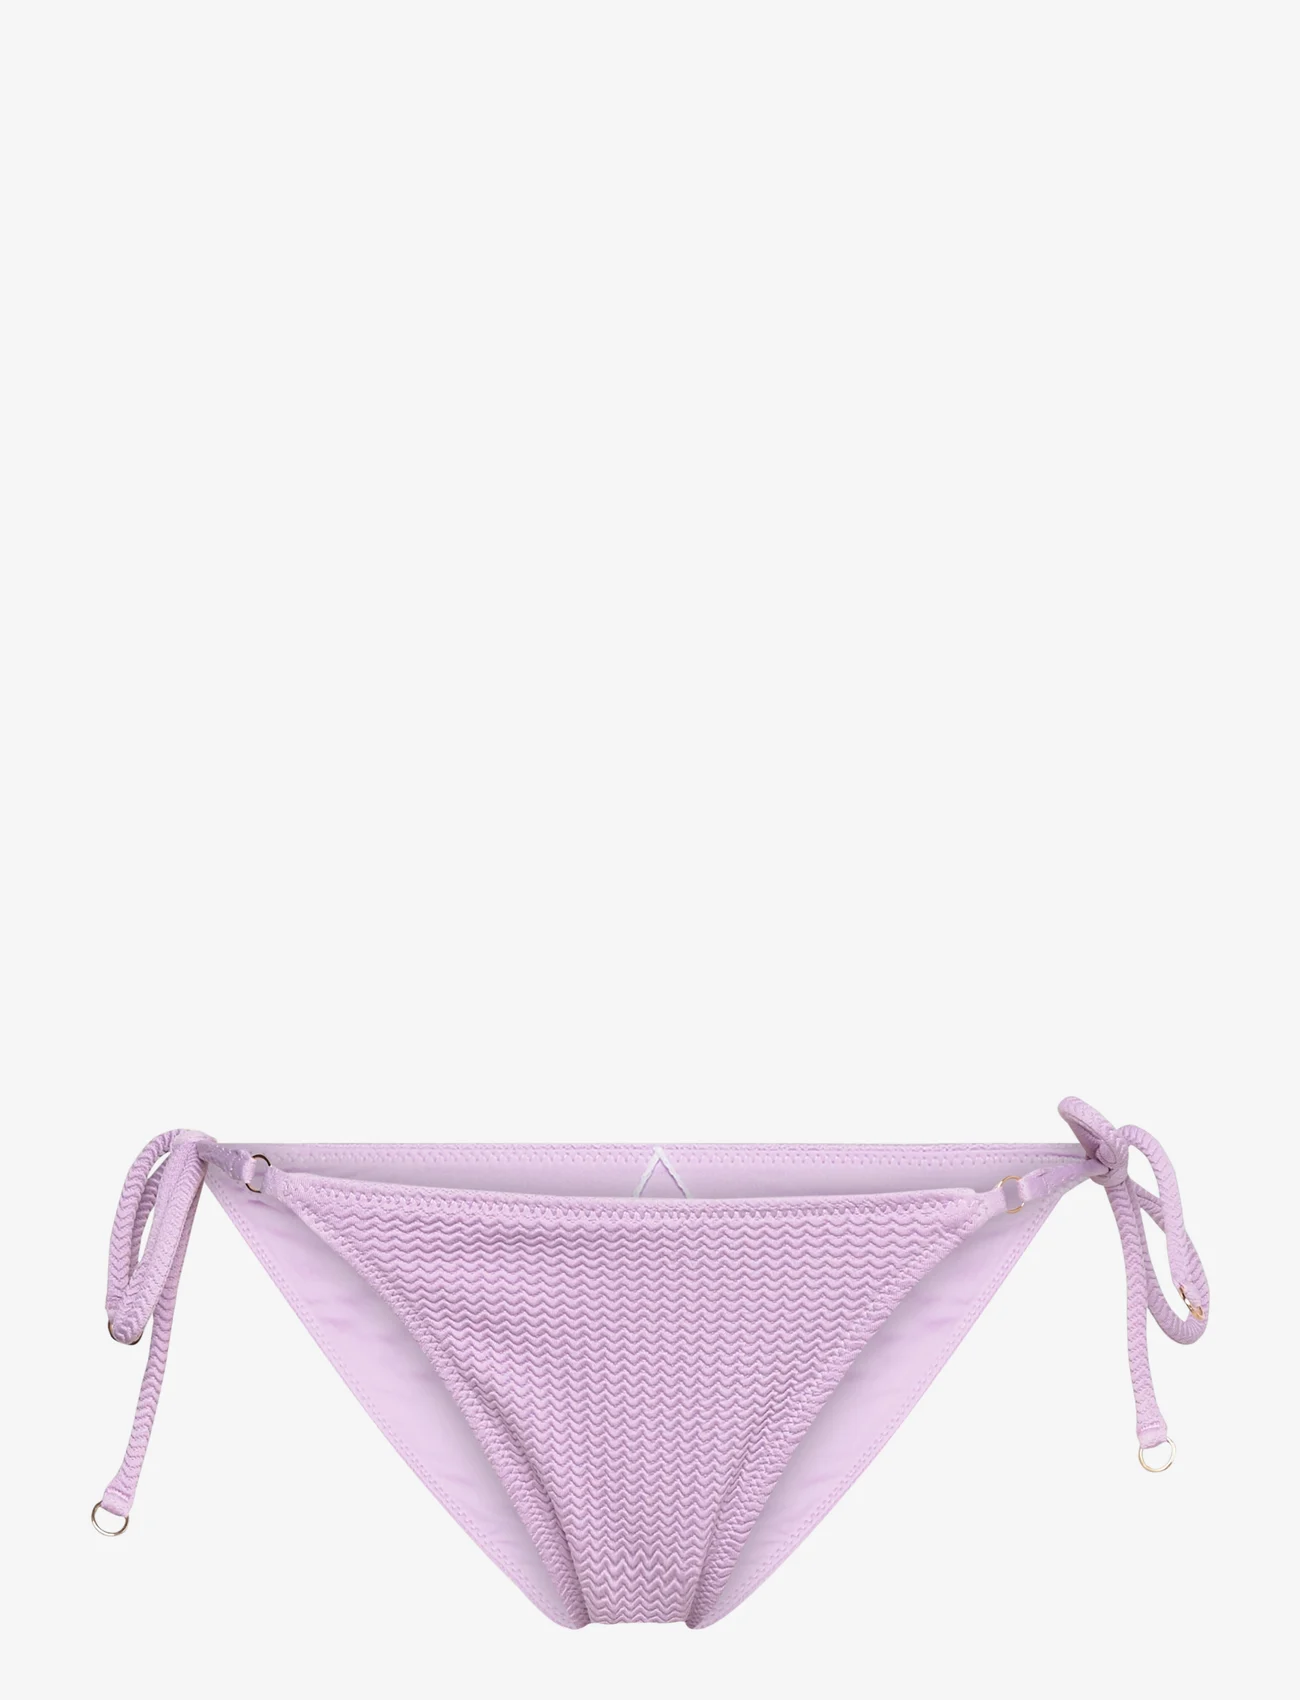 Seafolly - SeaDive Tie Side Rio Pant - bikinis mit seitenbändern - lilac - 0